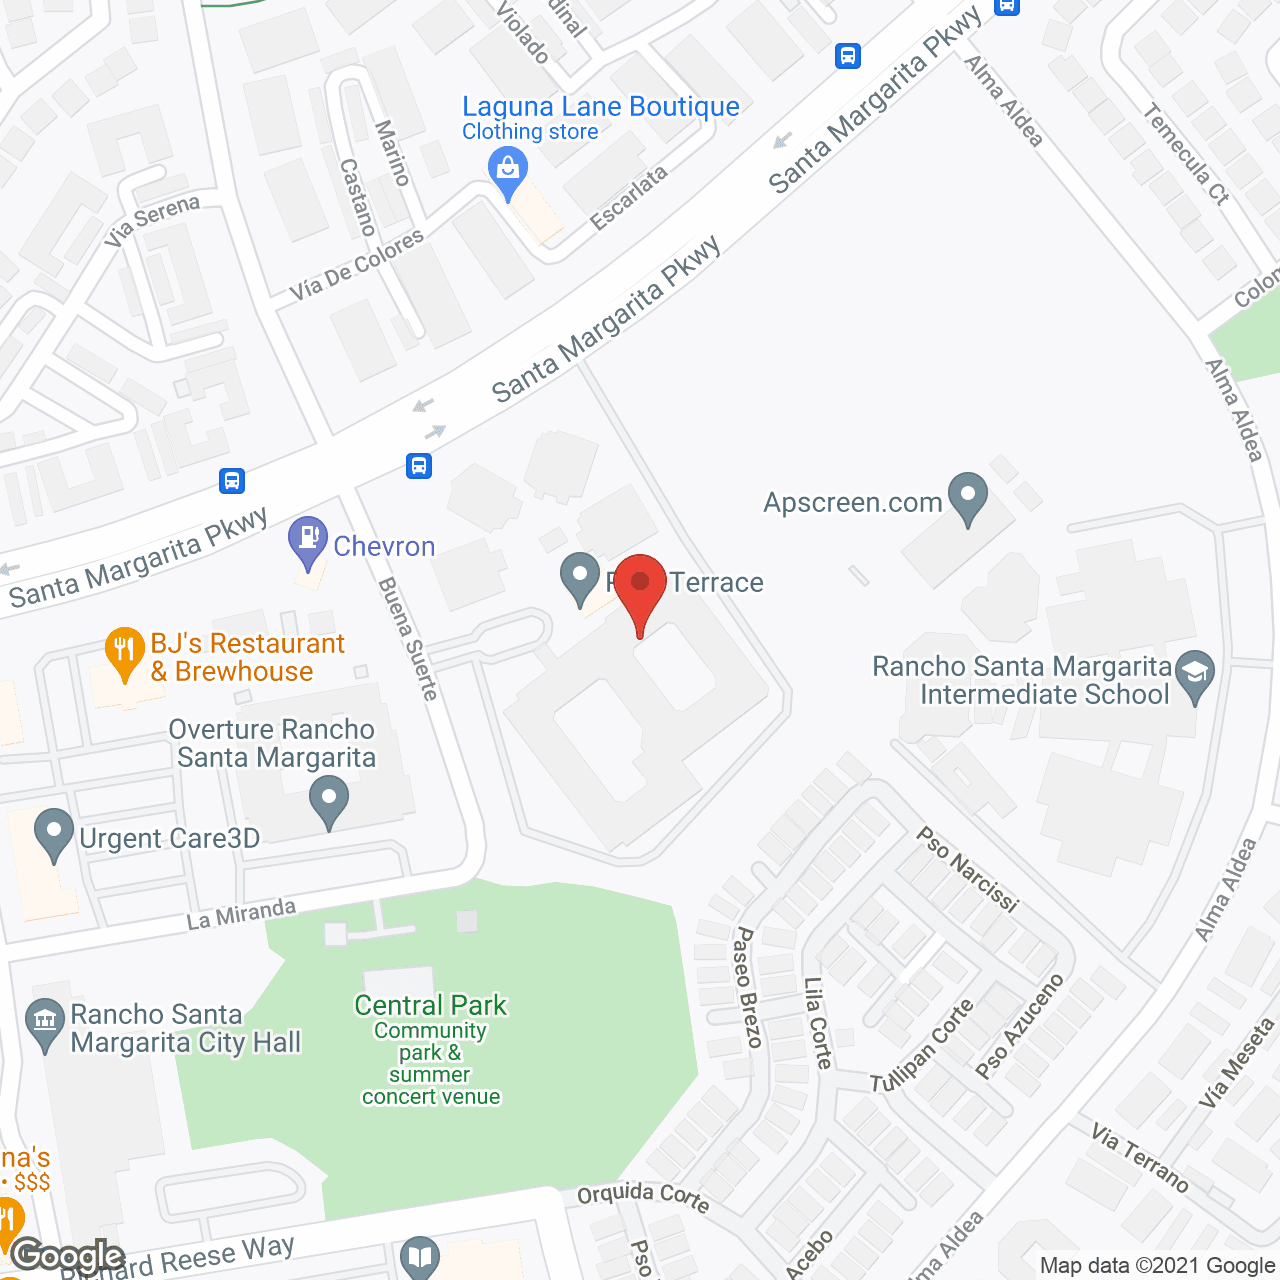 Park Terrace in google map